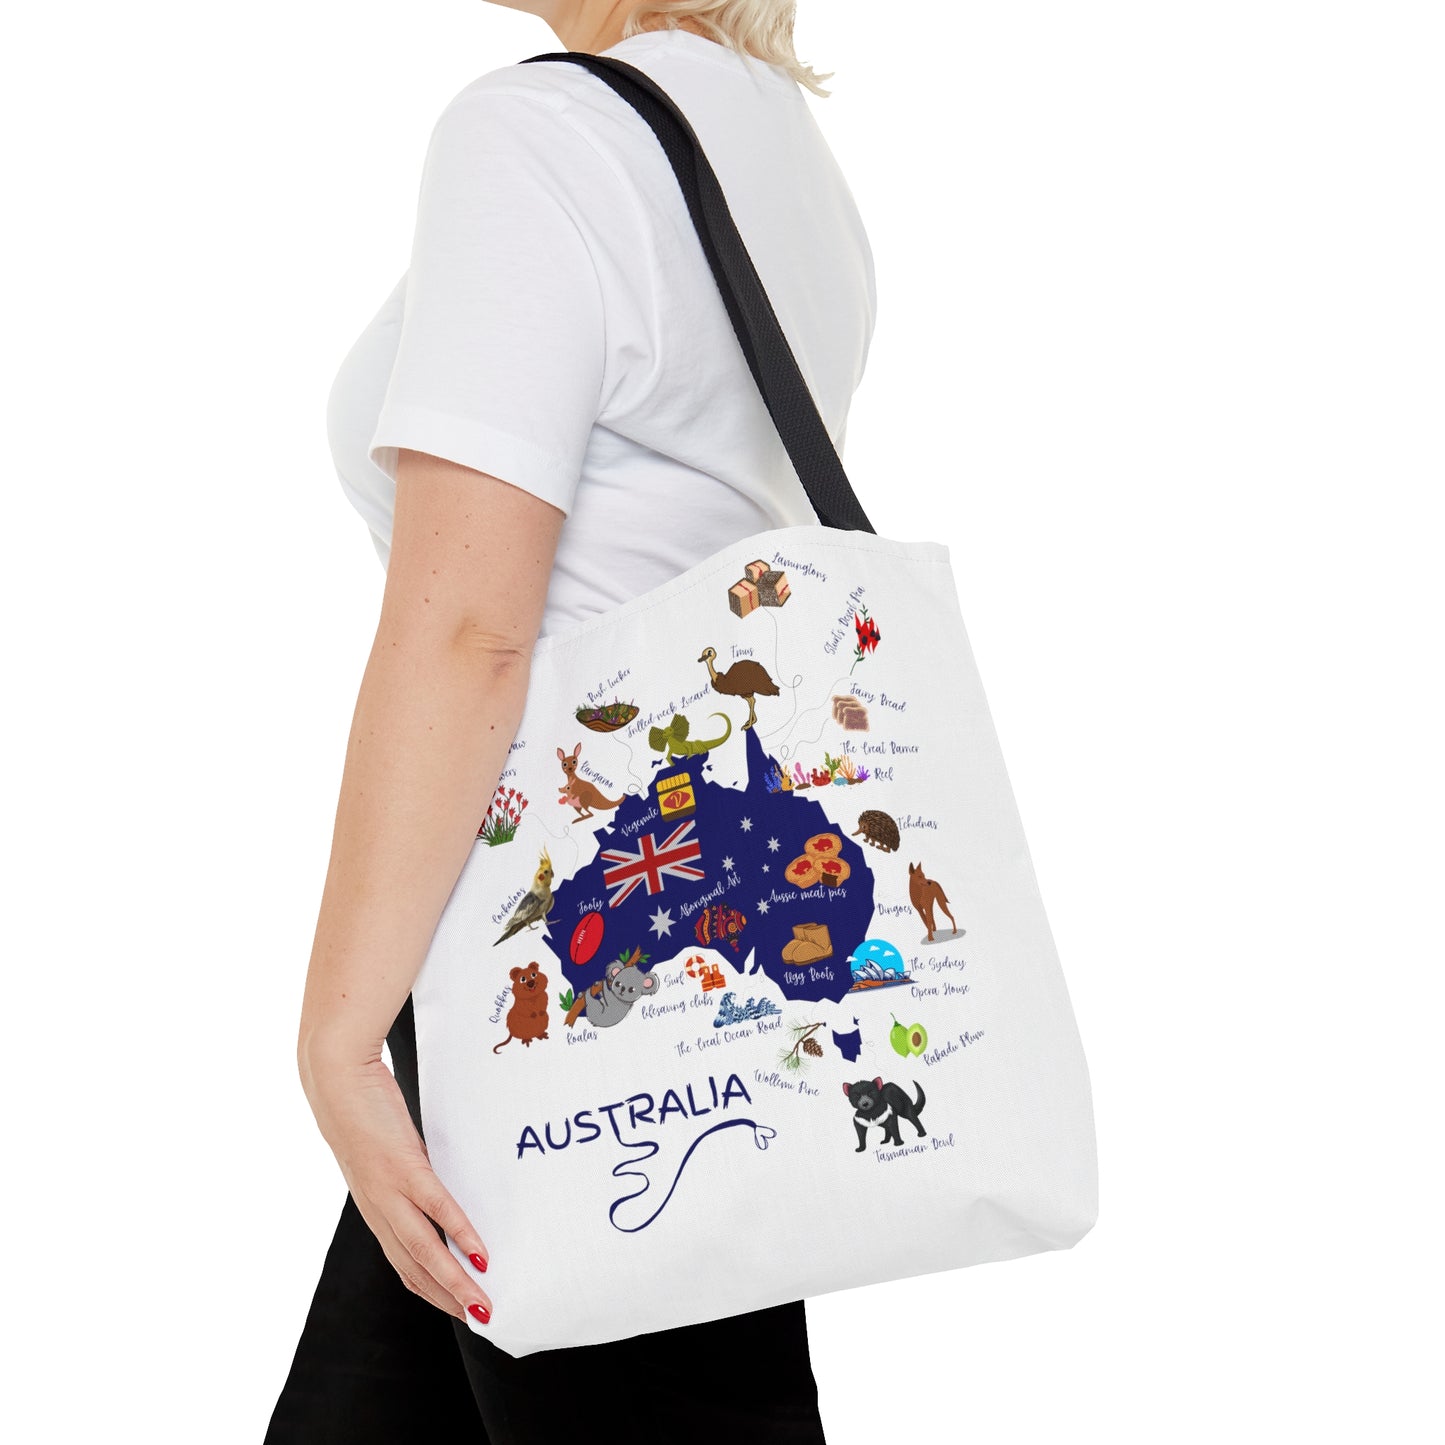 Australia Tote Bag